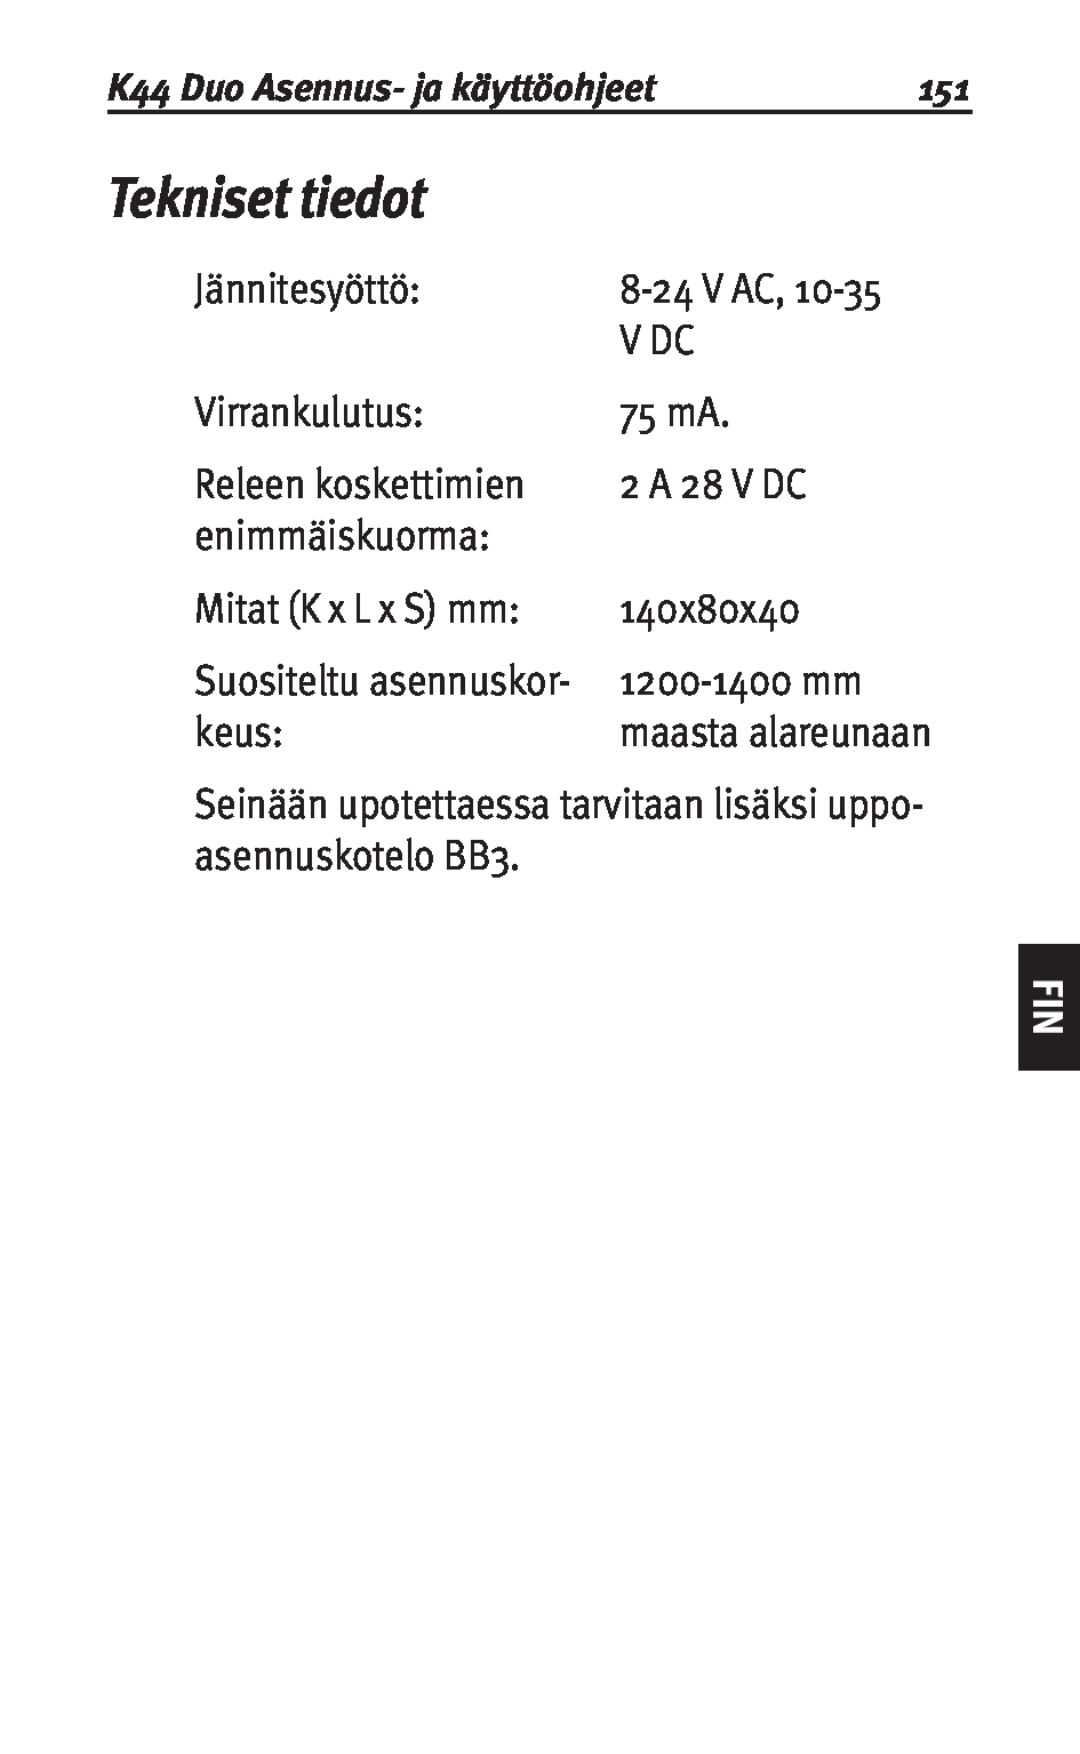 Siemens K44 user manual Tekniset tiedot 